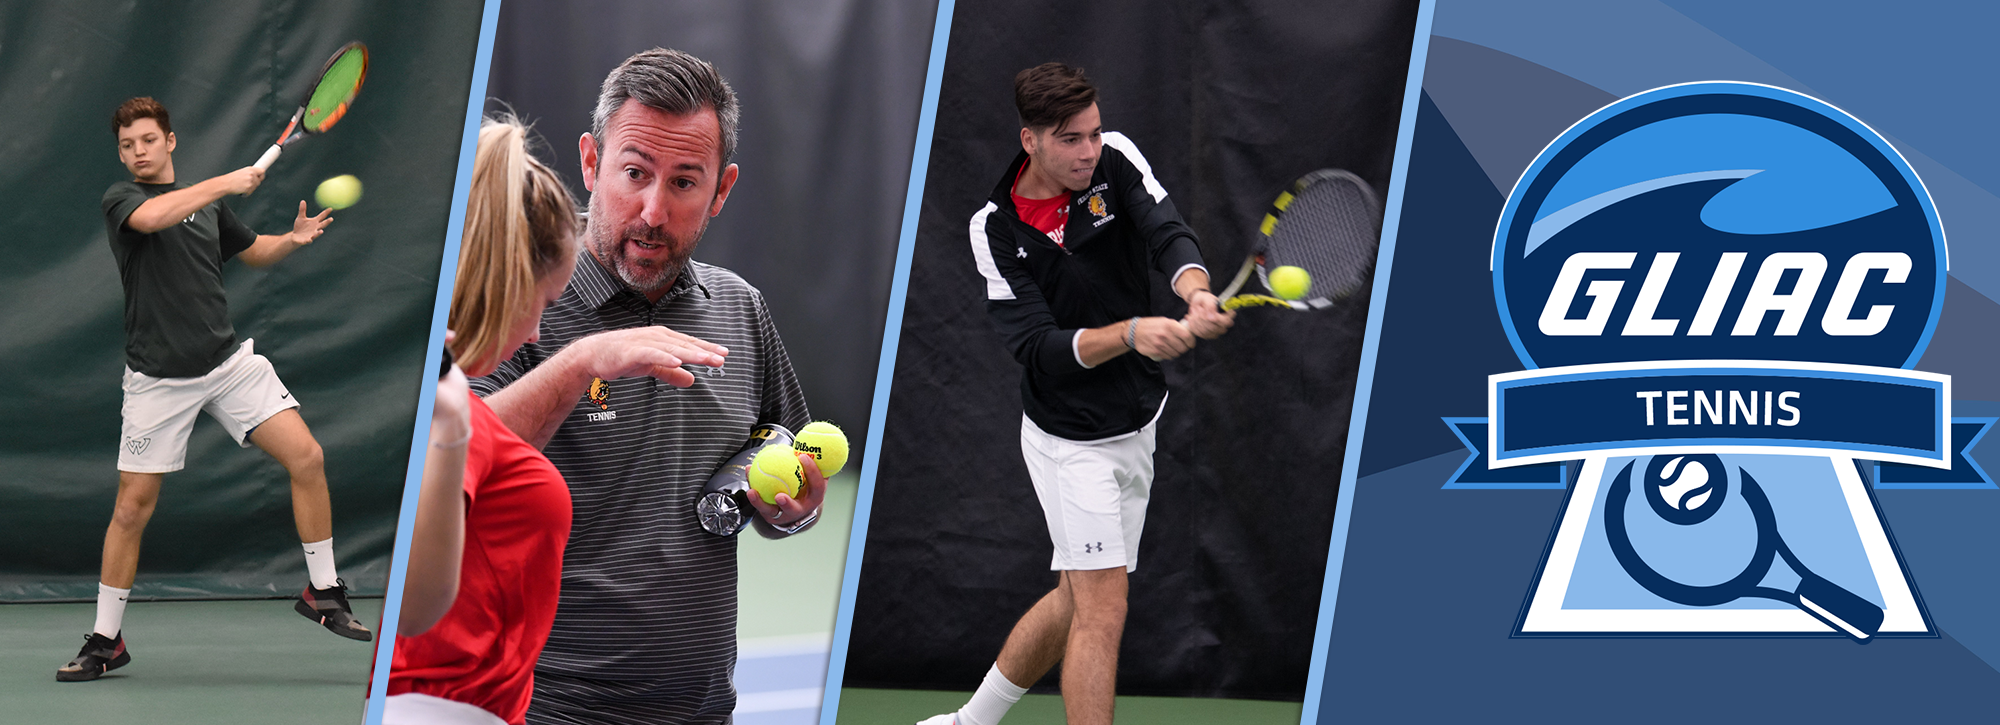 FSU's Guerre and Doren, and WSU's Spicer Receive Men's Tennis top Honors; All-GLIAC Teams Announced